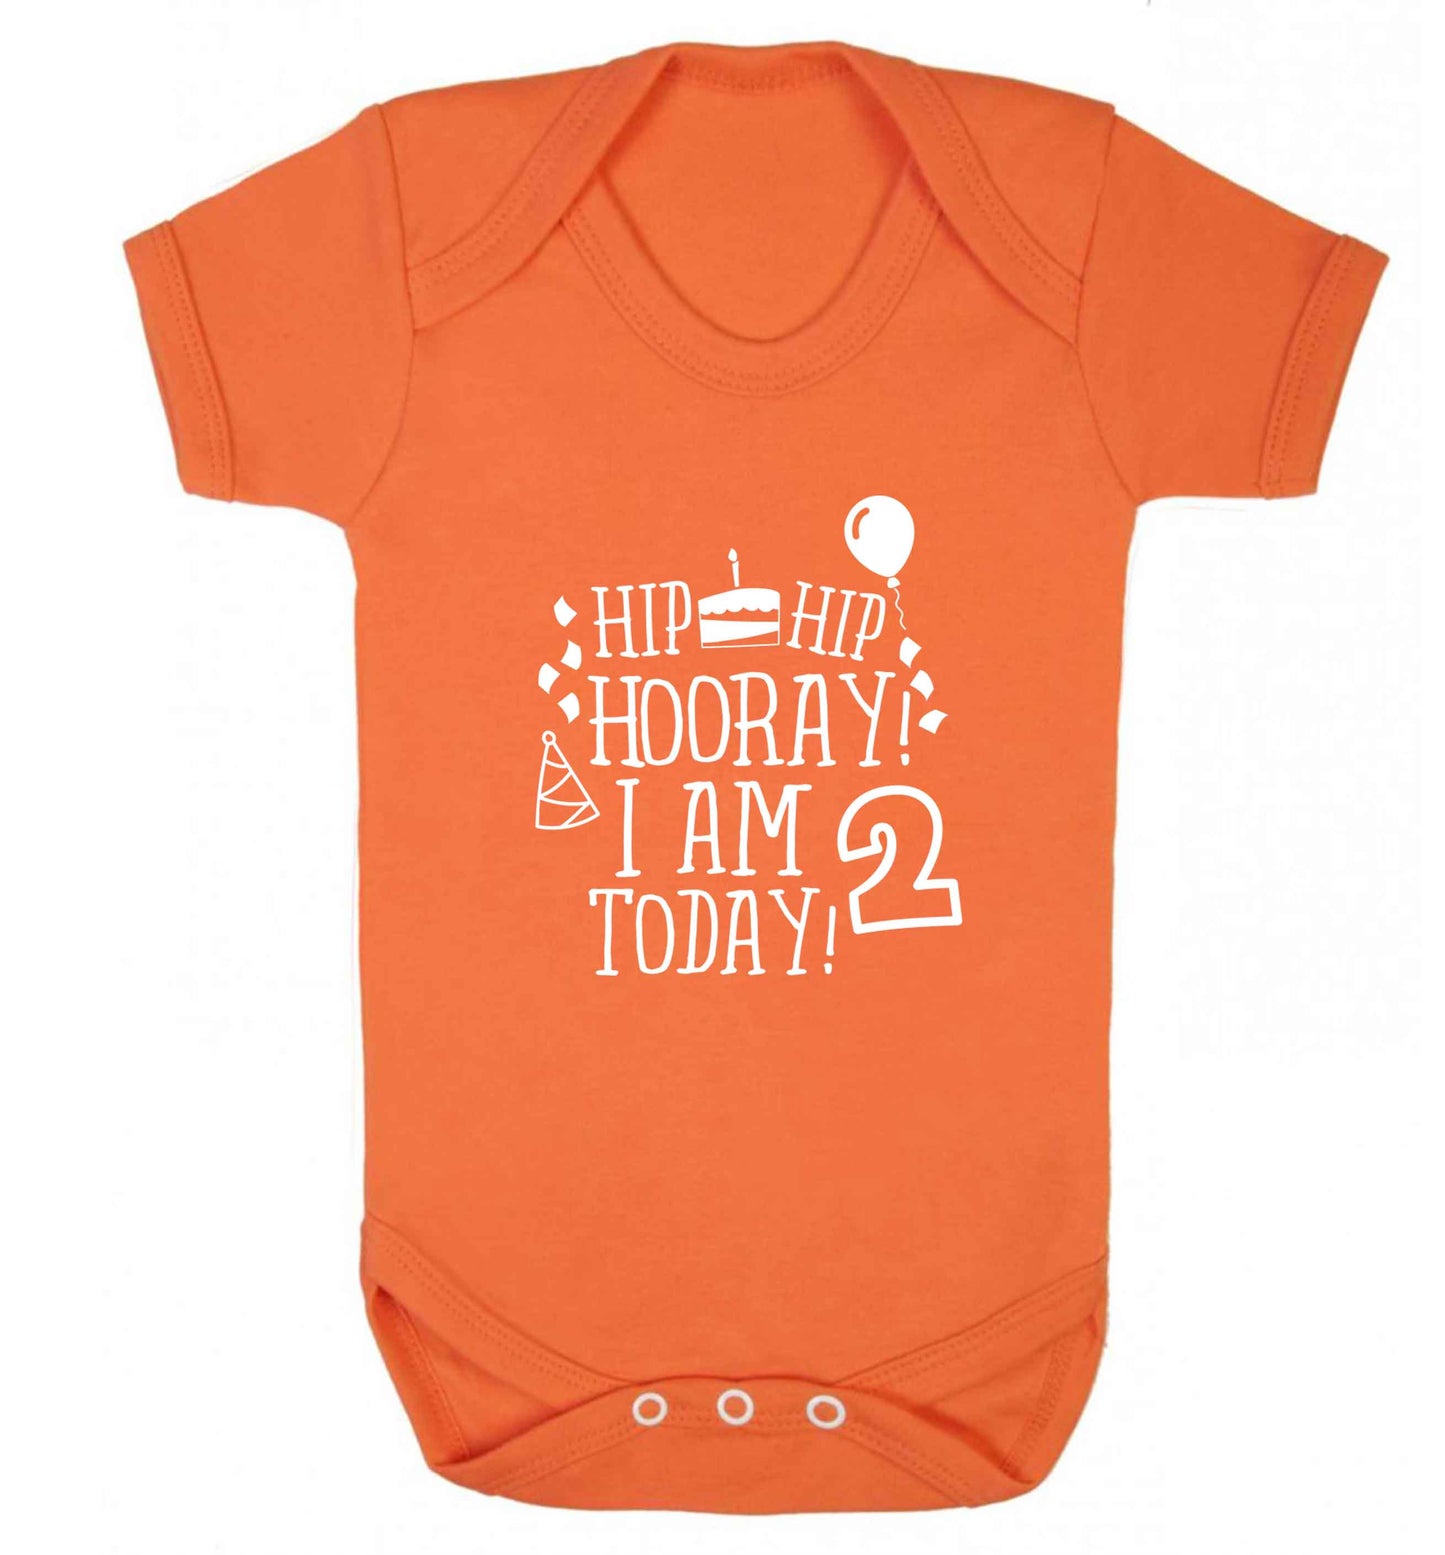 I'm 2 Today baby vest orange 18-24 months